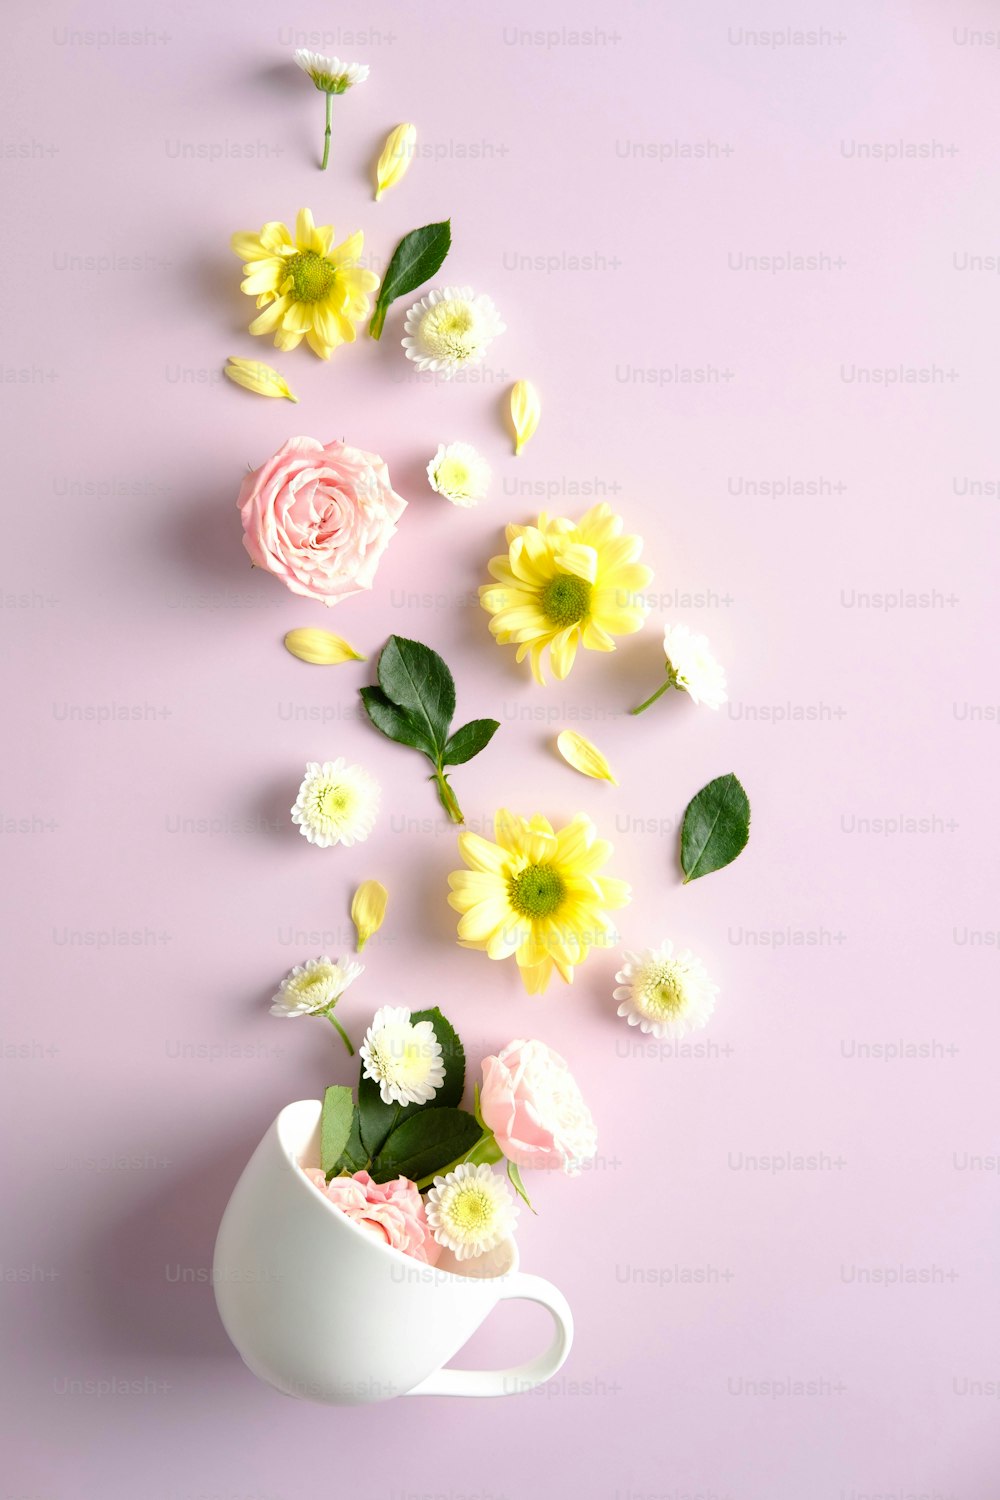 Composición creativa con taza y flores sobre fondo rosa. Concepto de té de hierbas.